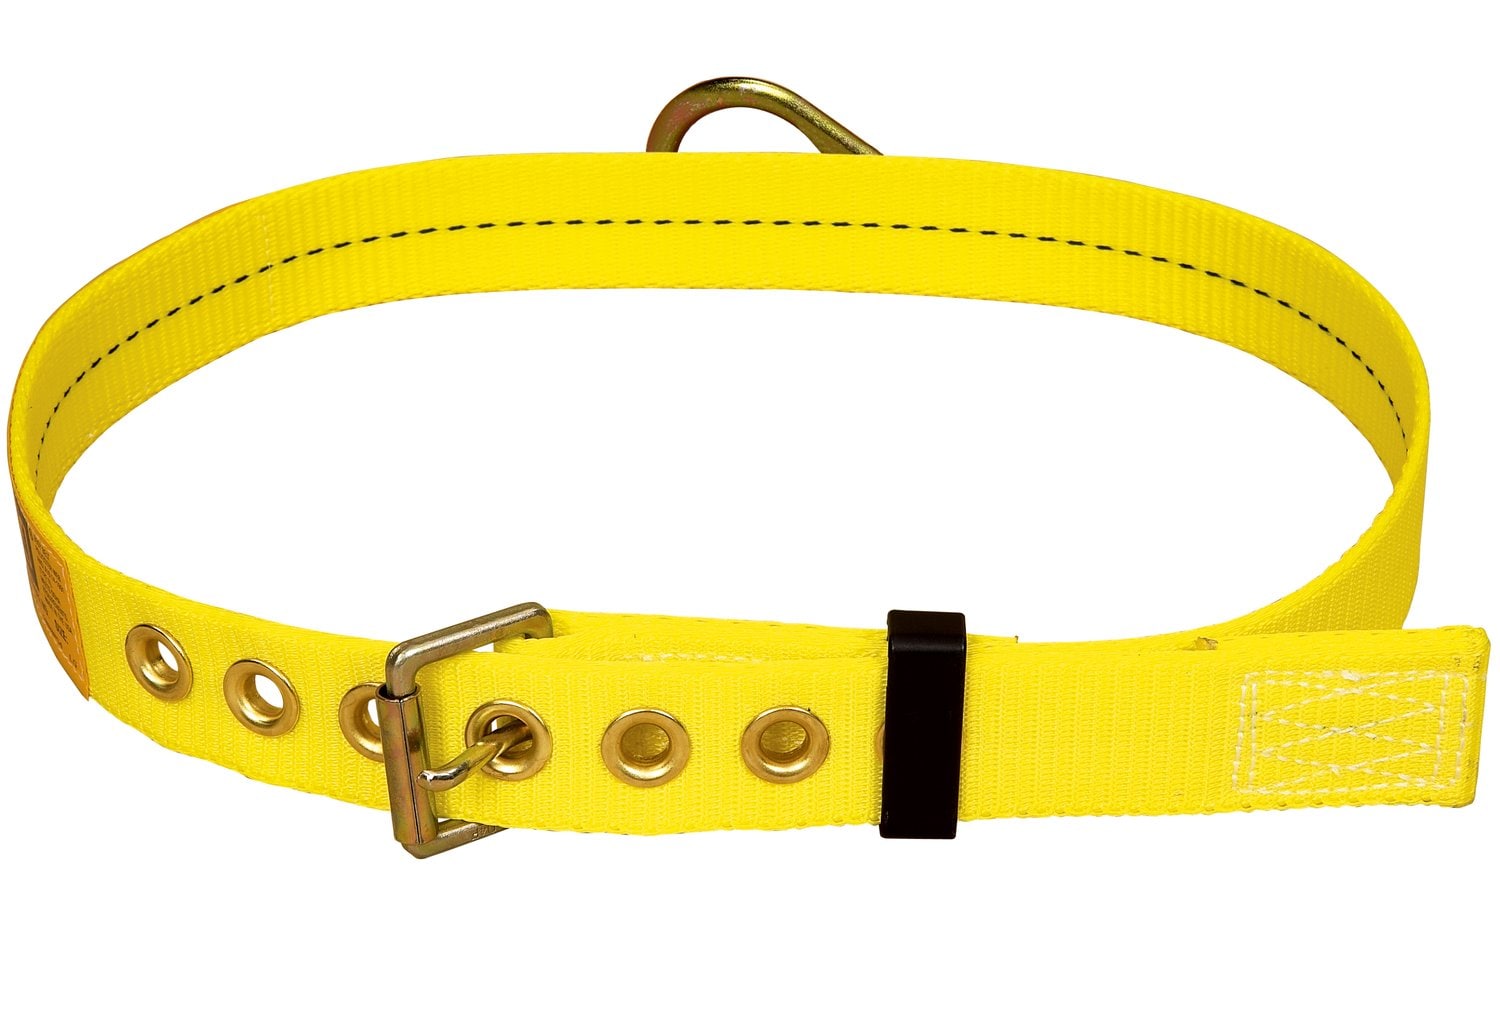 7012815004 - 3M DBI-SALA Tongue Buckle Restraint Belt 1000616, Yellow, X-Large